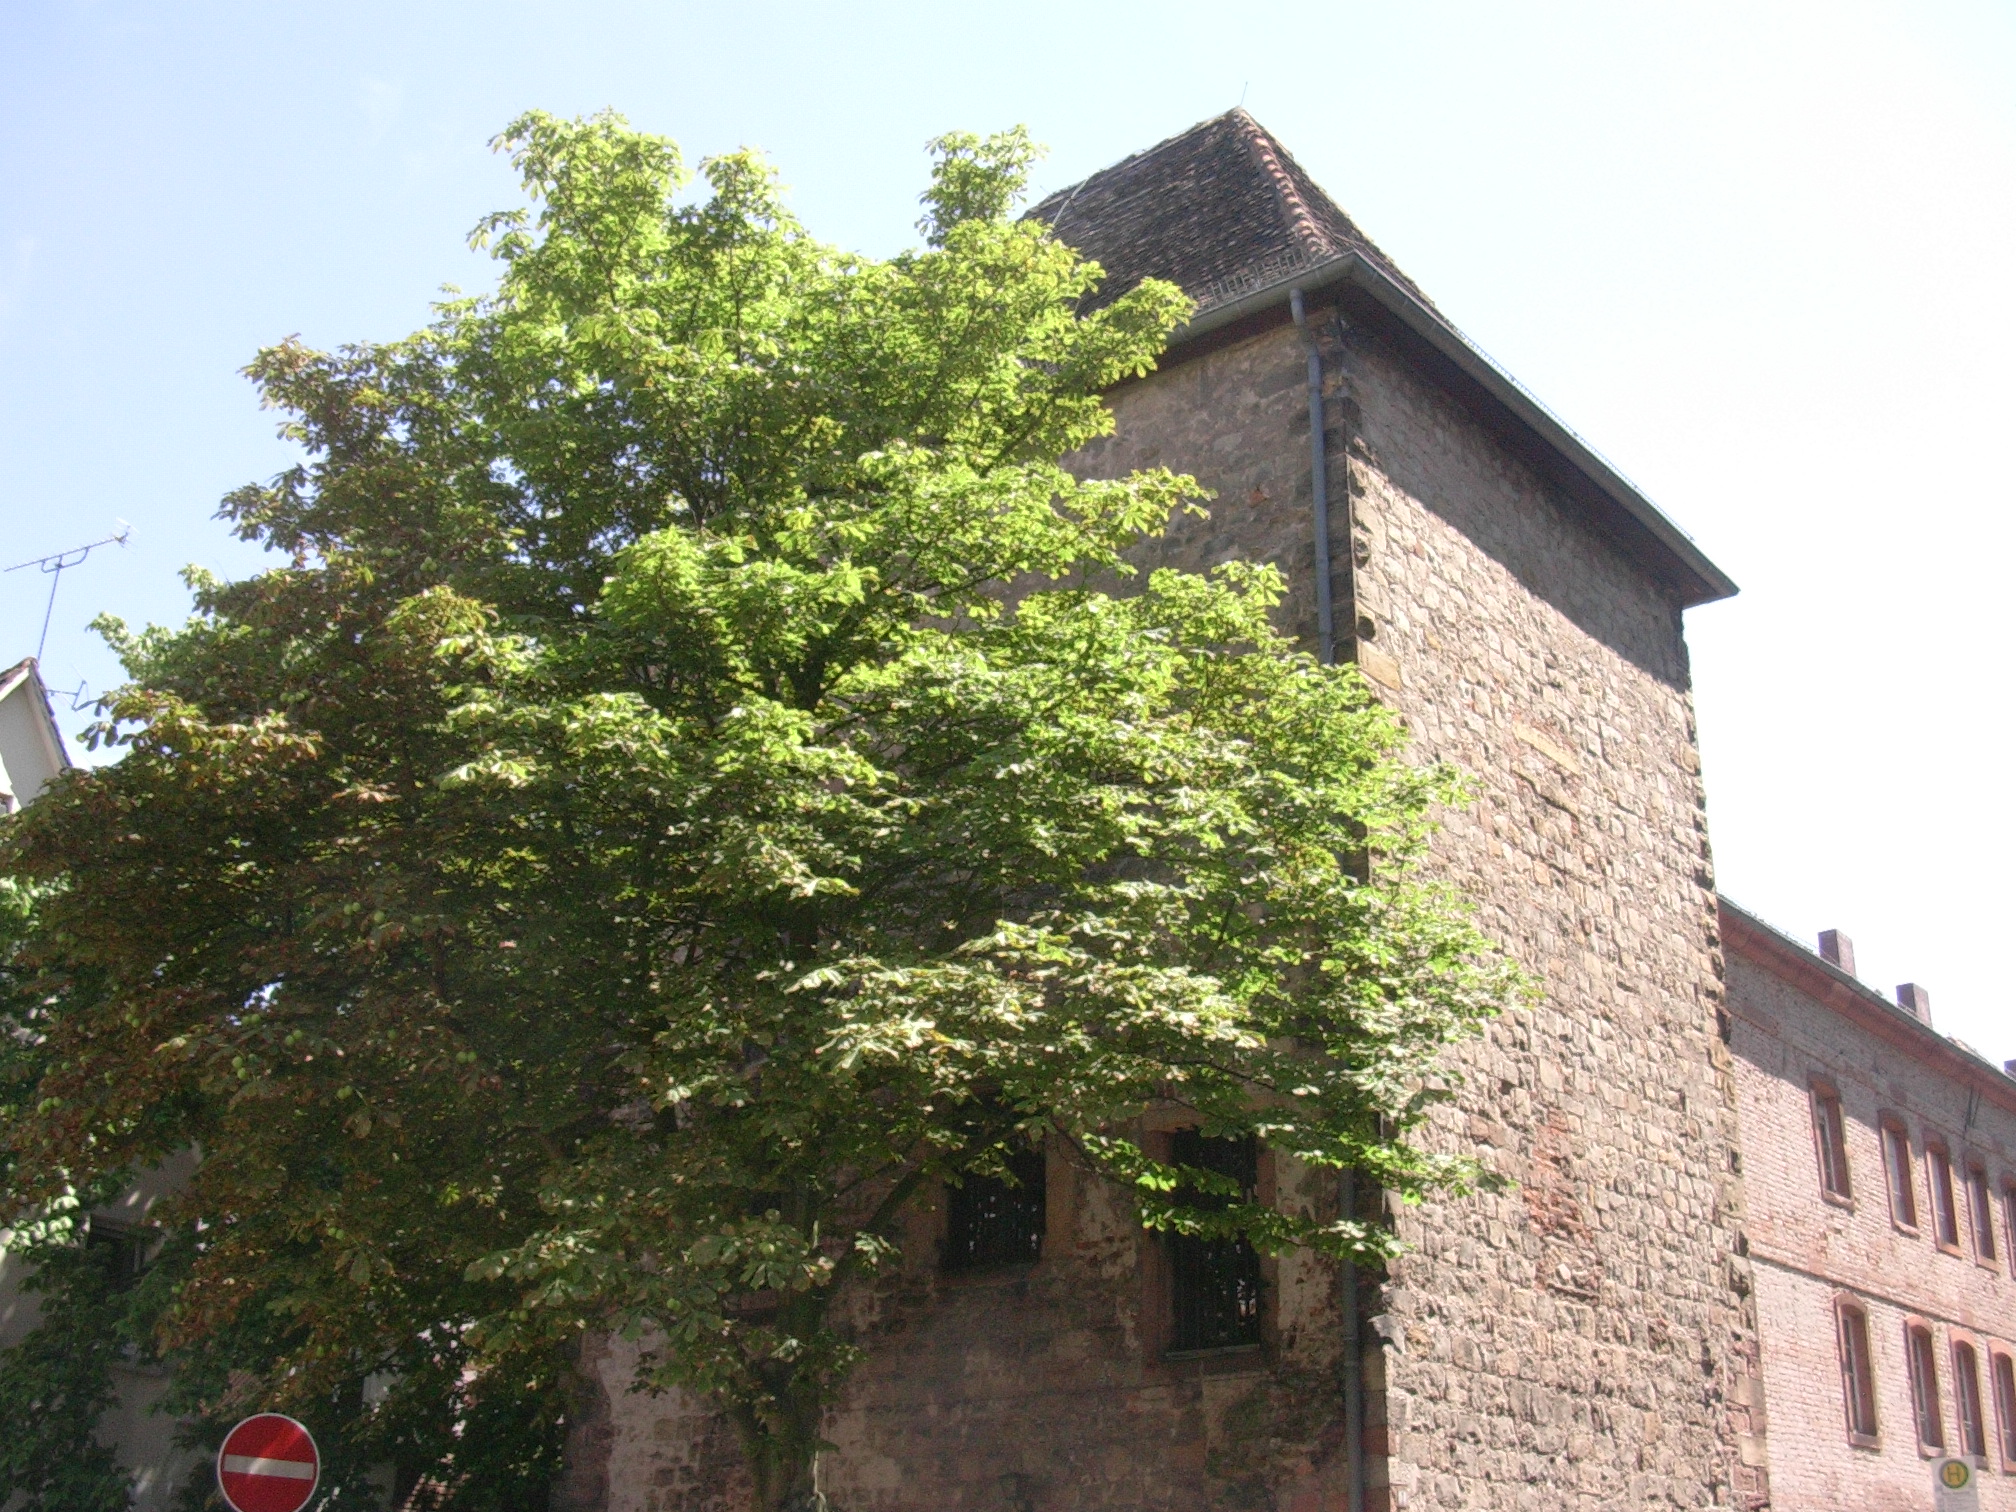 Galeerenturm in Landau